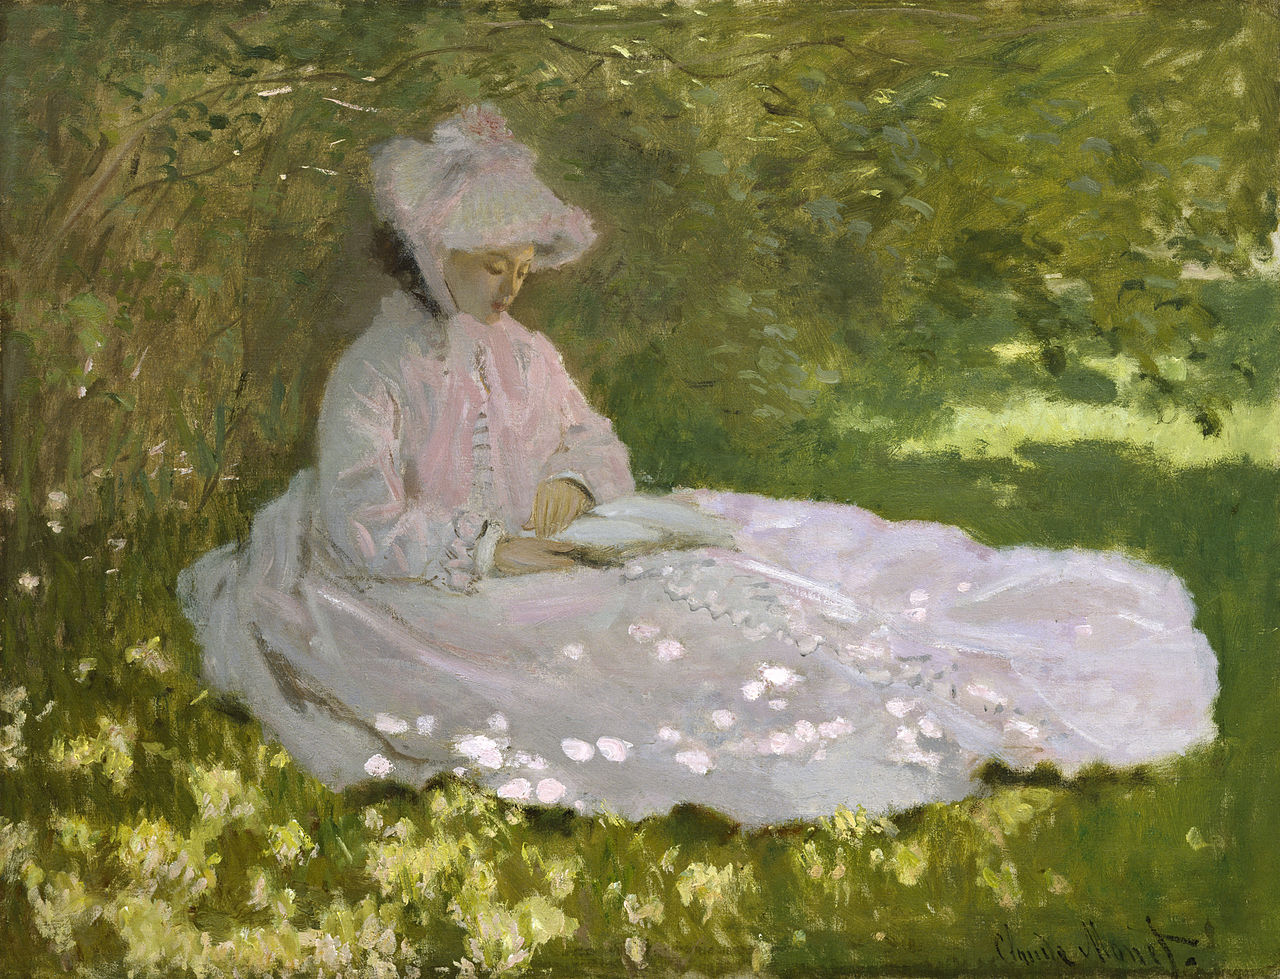 Claude+Monet-1840-1926 (707).jpg